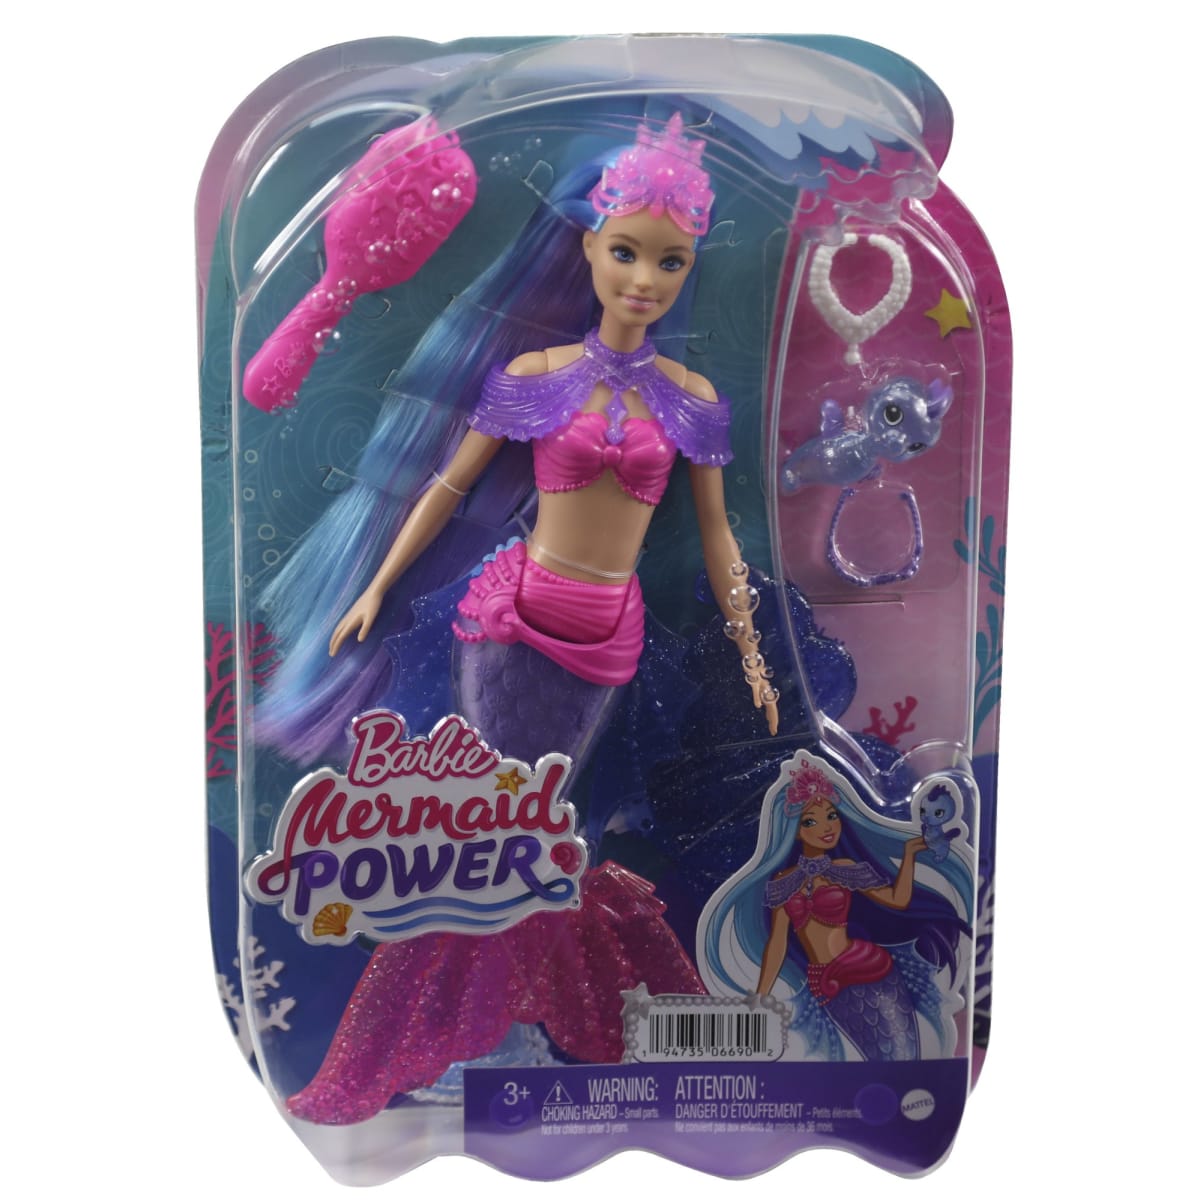 Barbie Mermaid Power Malibu merenneito nukke  verkkokauppa